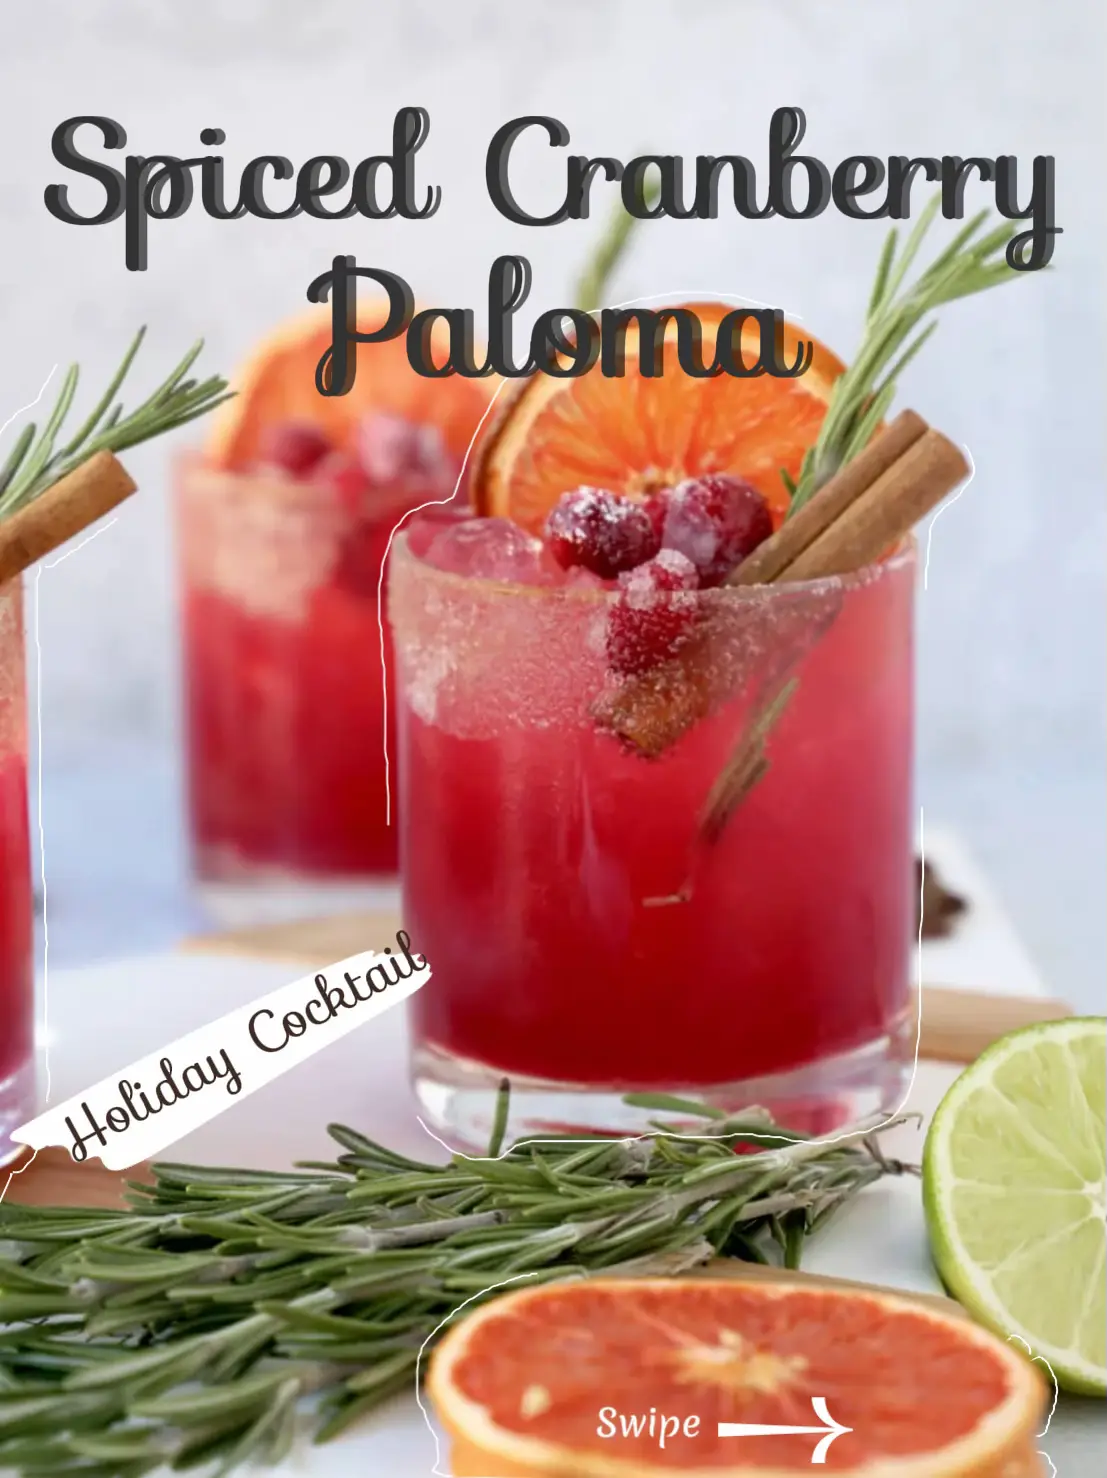 Paloma Cocktail - Izy Hossack - Top With Cinnamon